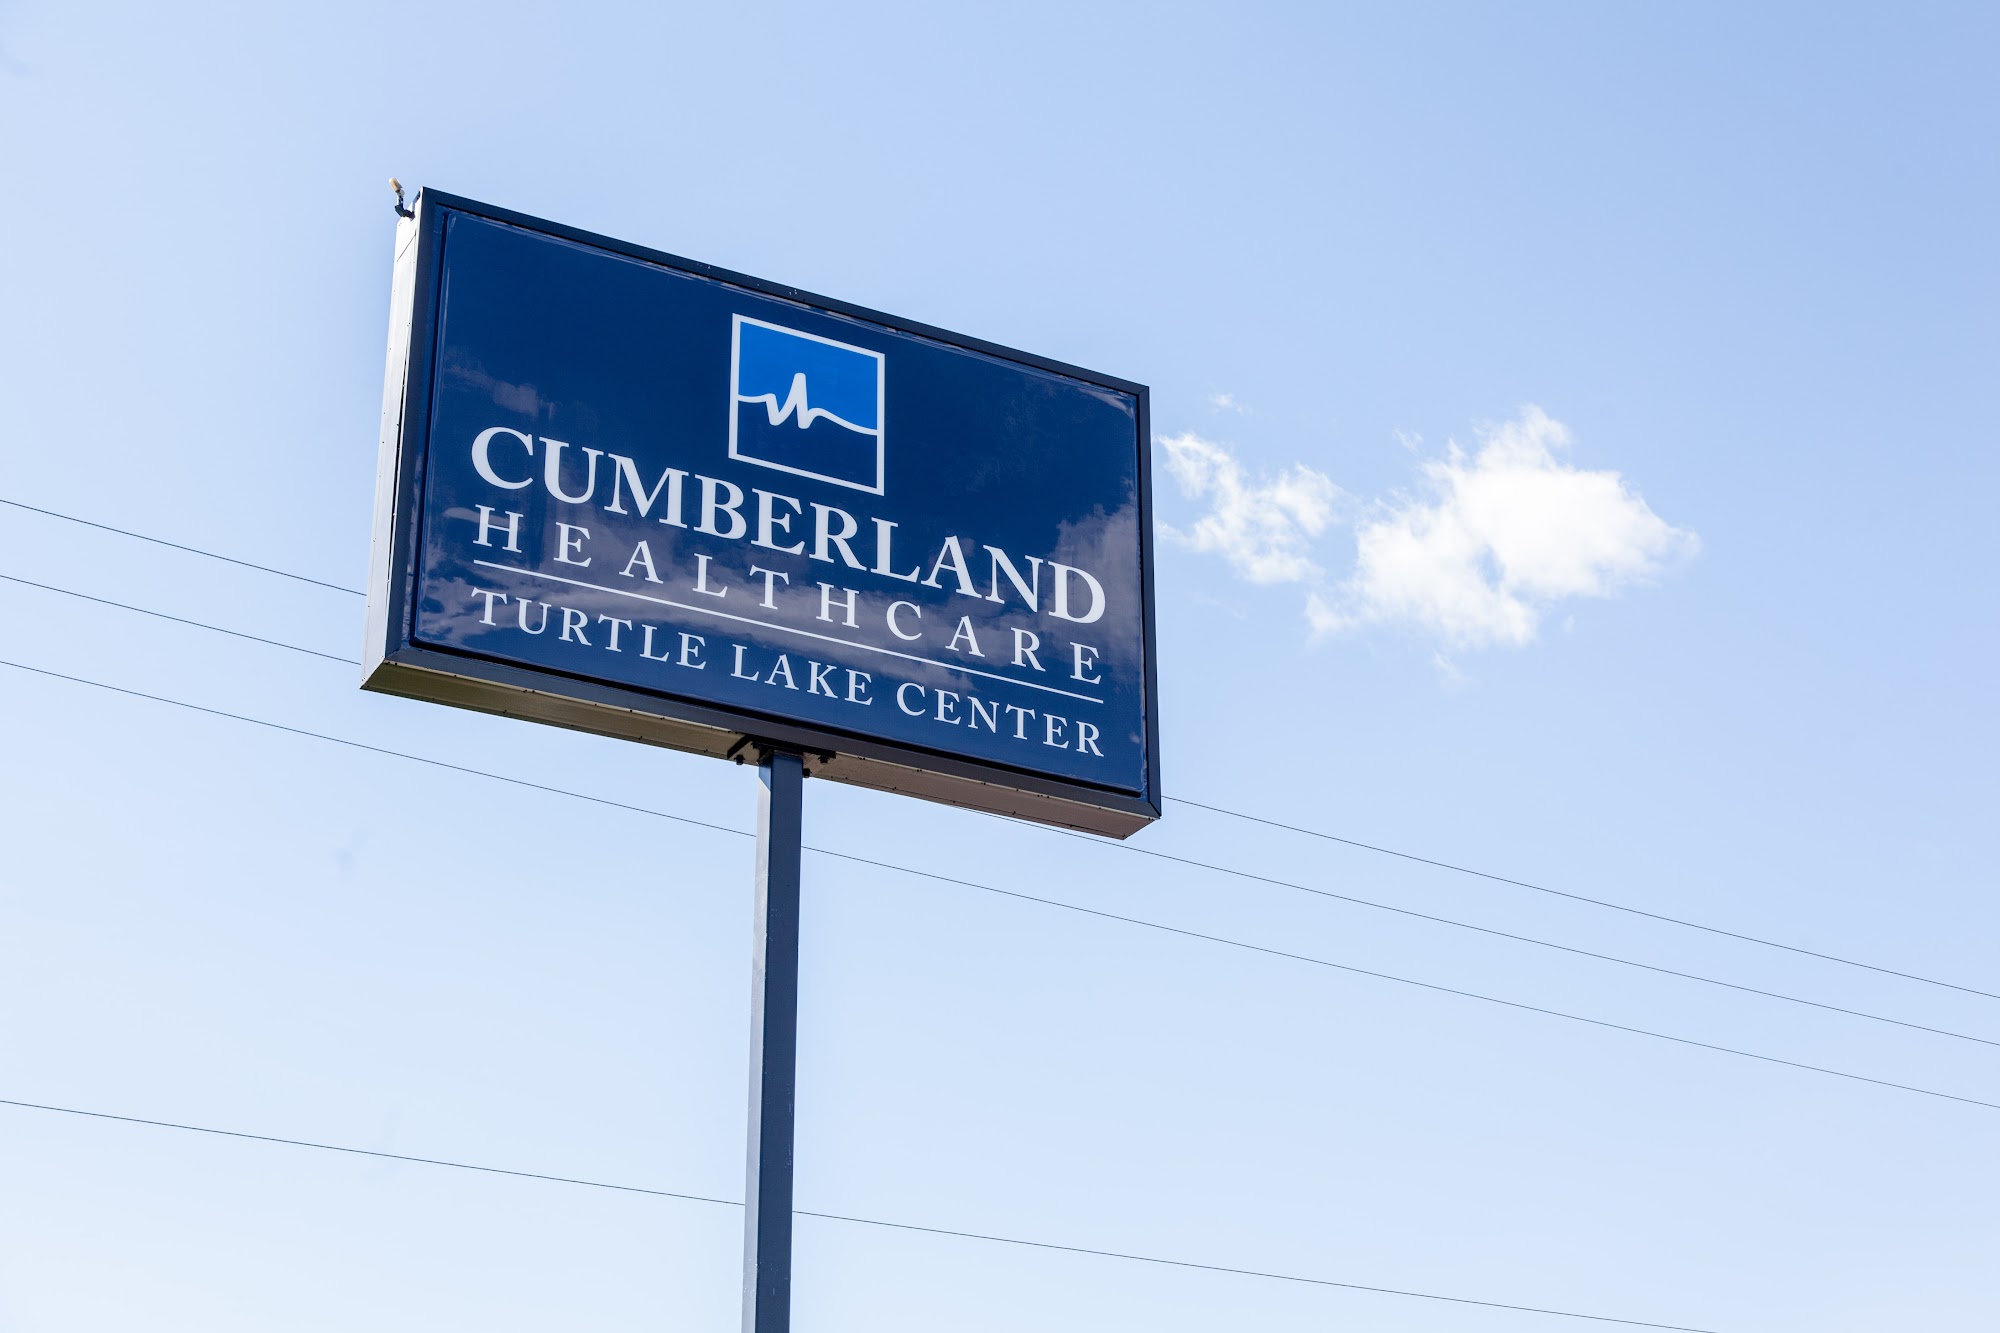 Cumberland Healthcare: Turtle Lake Center 632 US-8, Turtle Lake Wisconsin 54889